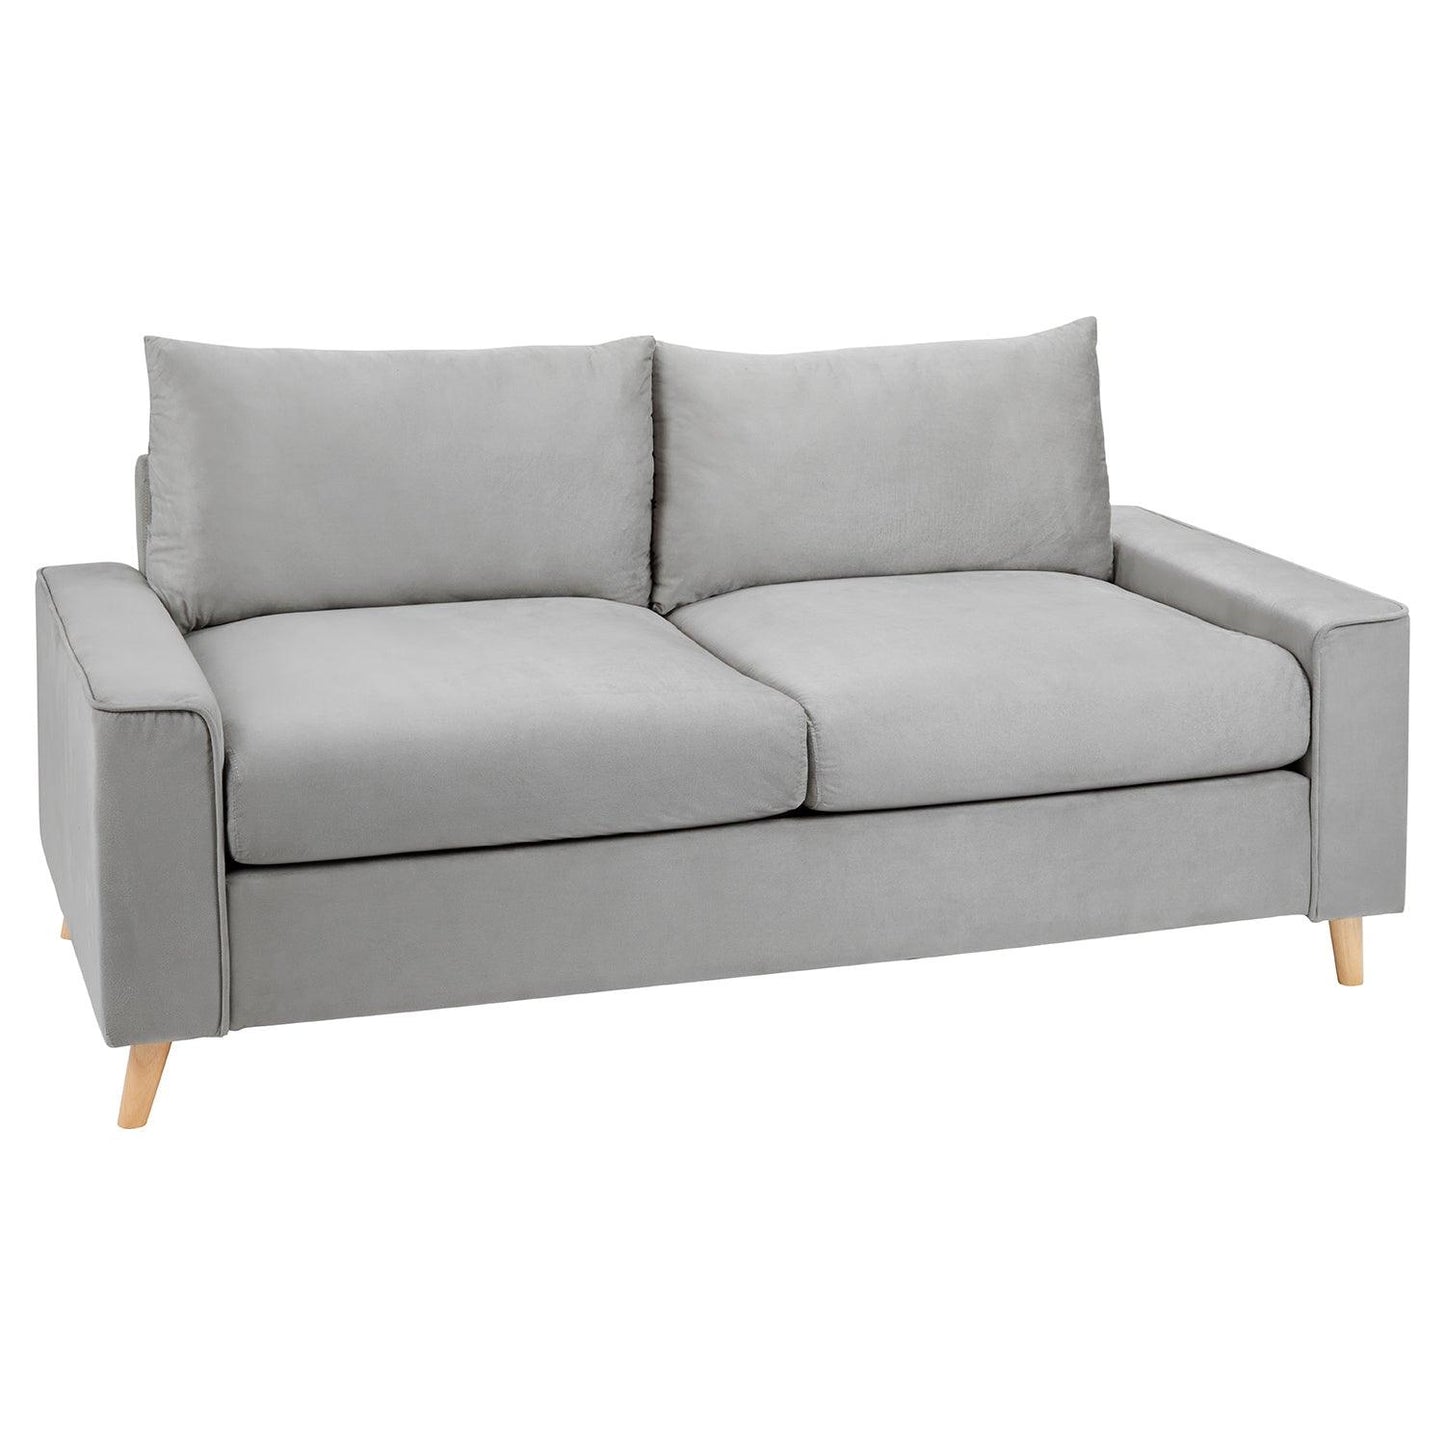 Outlet - Elodie 2 seater sofa – grey velvet - modern - Laura James